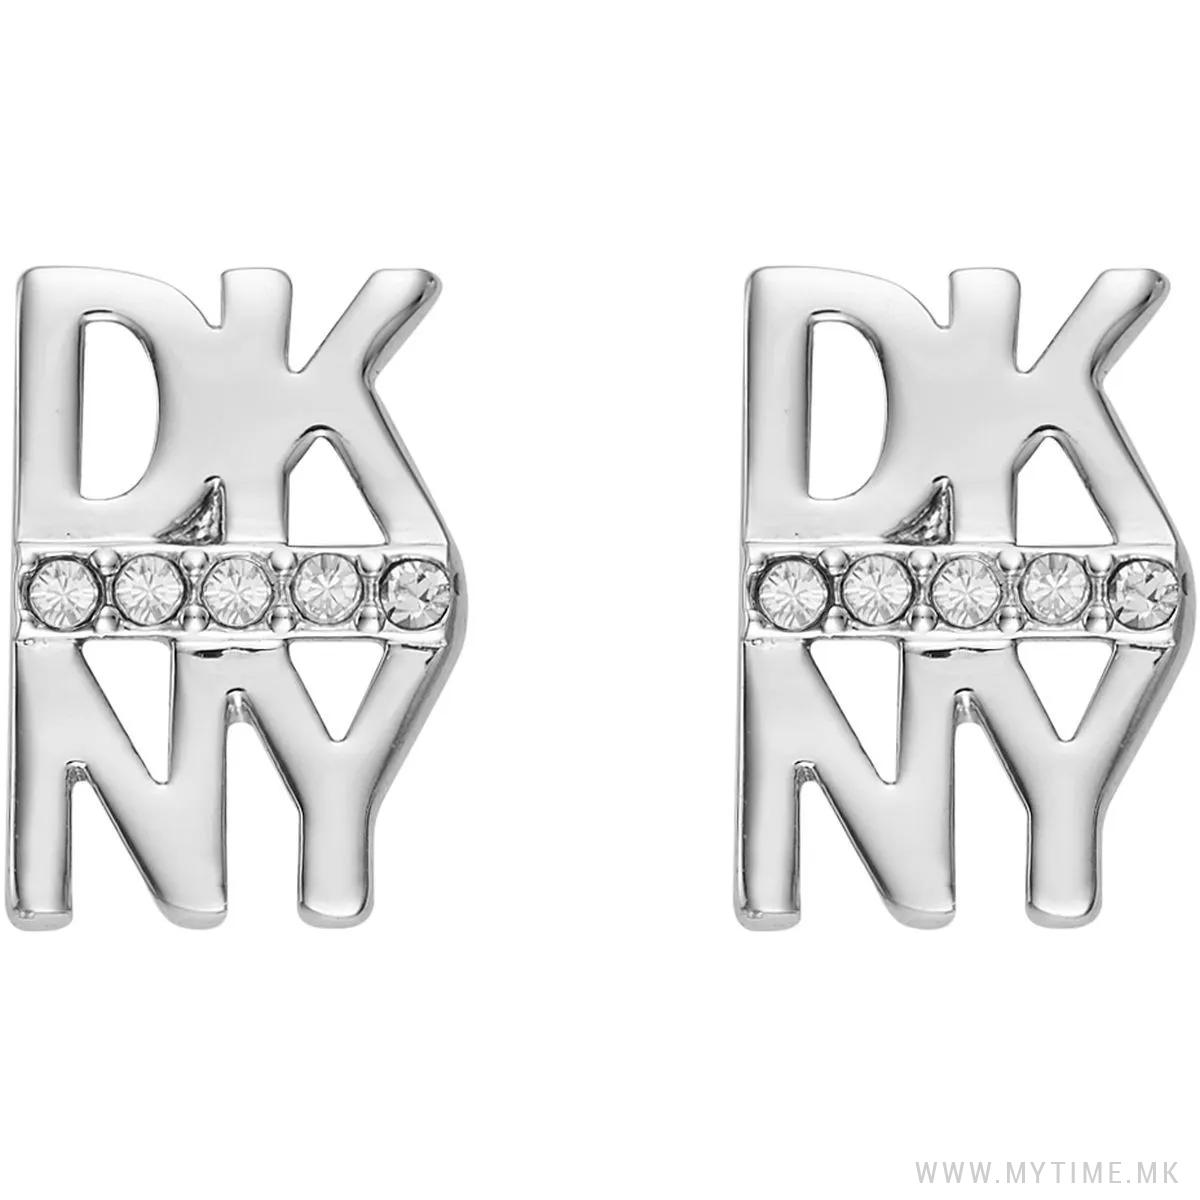 5520003 DKNY New York 